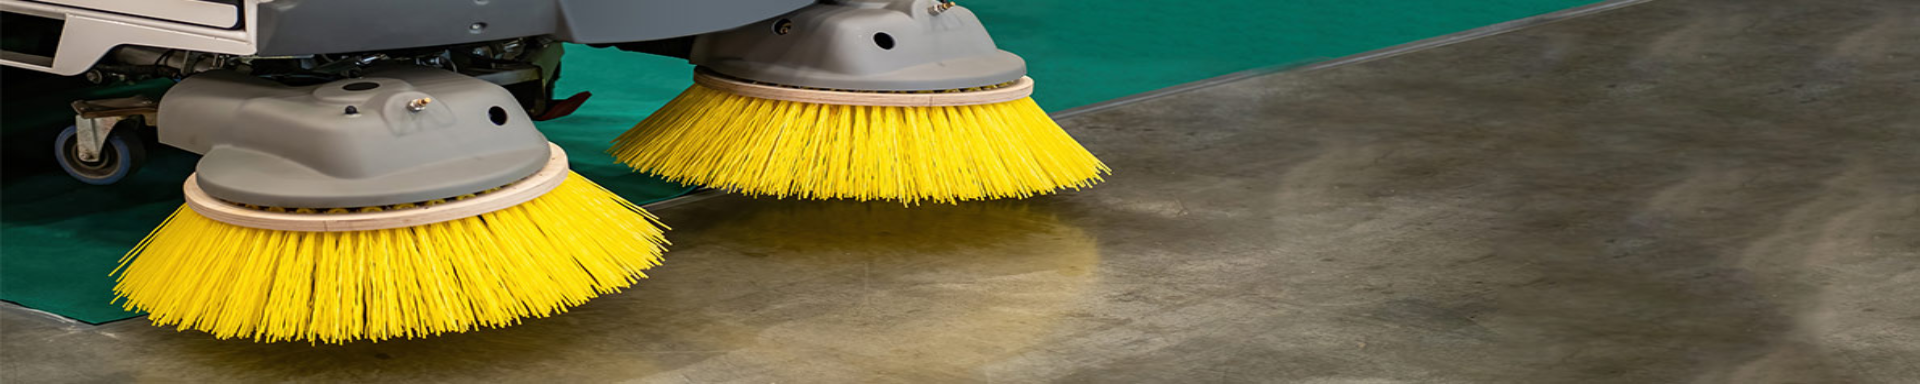 Floor Machines, Sweeper & Scrubber Batteries | RogueFuel.ca | Munro Industries rf-100703090404